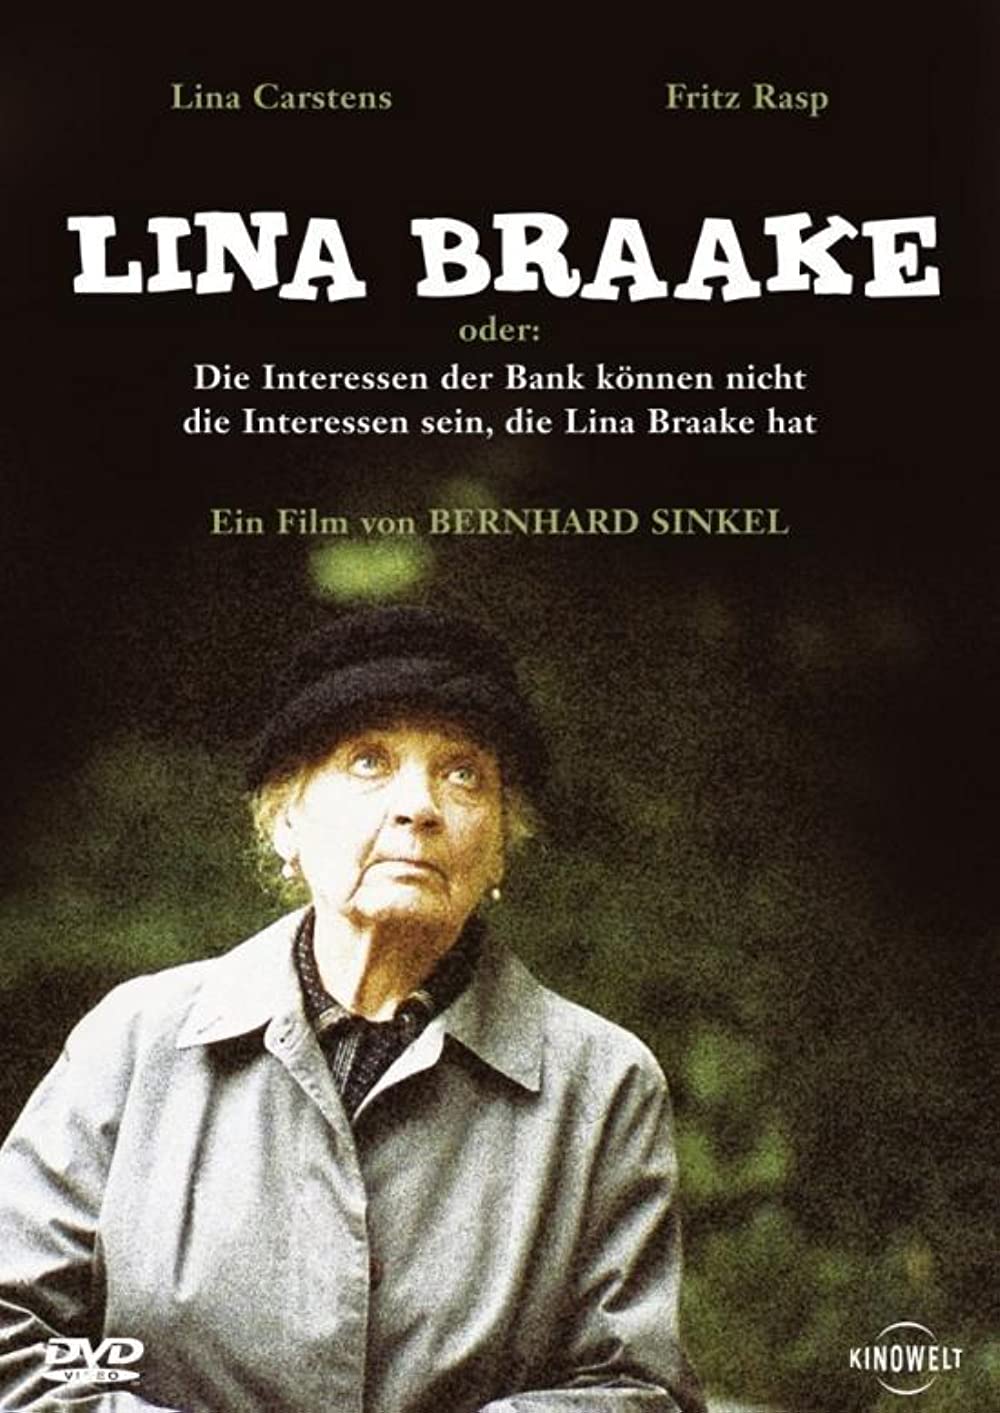 Filmbeschreibung zu Lina Braake